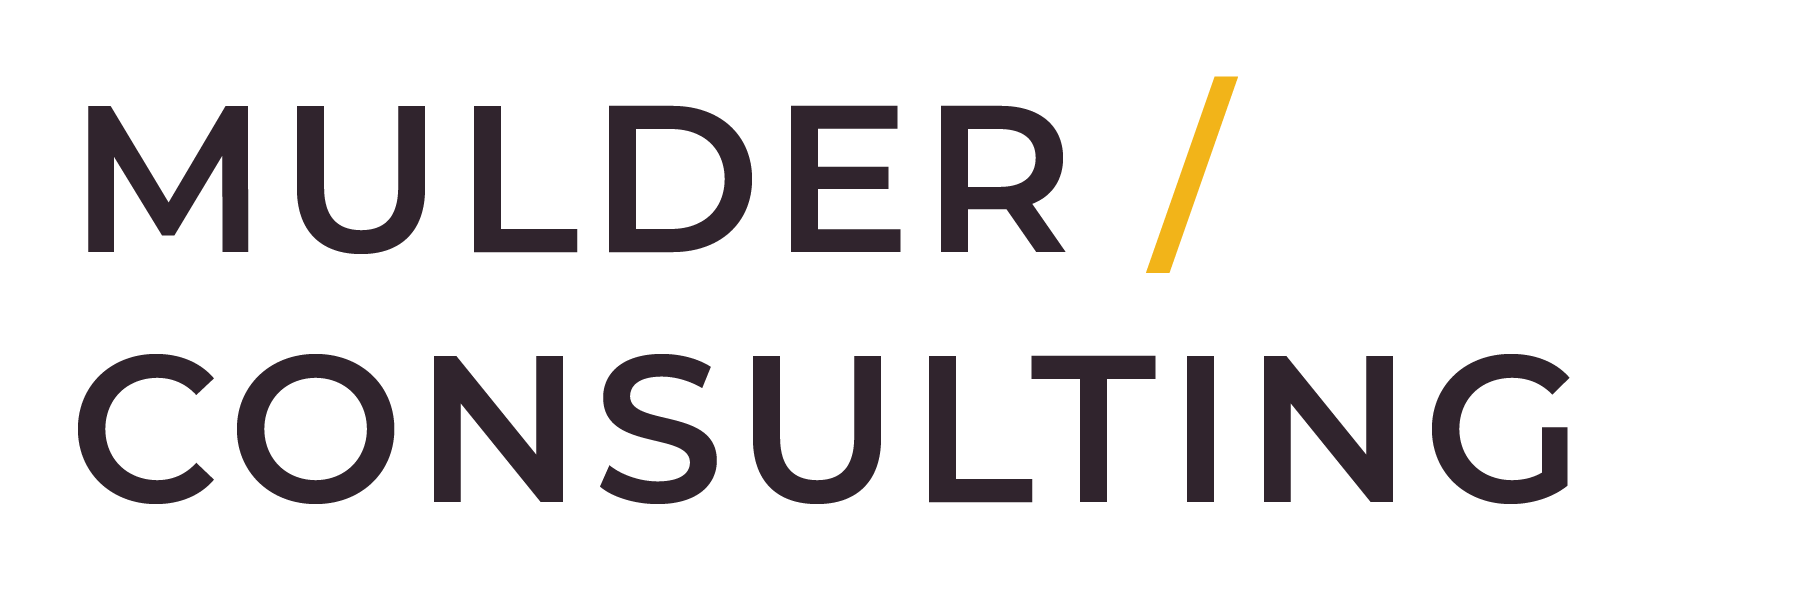 mulder consulting logo